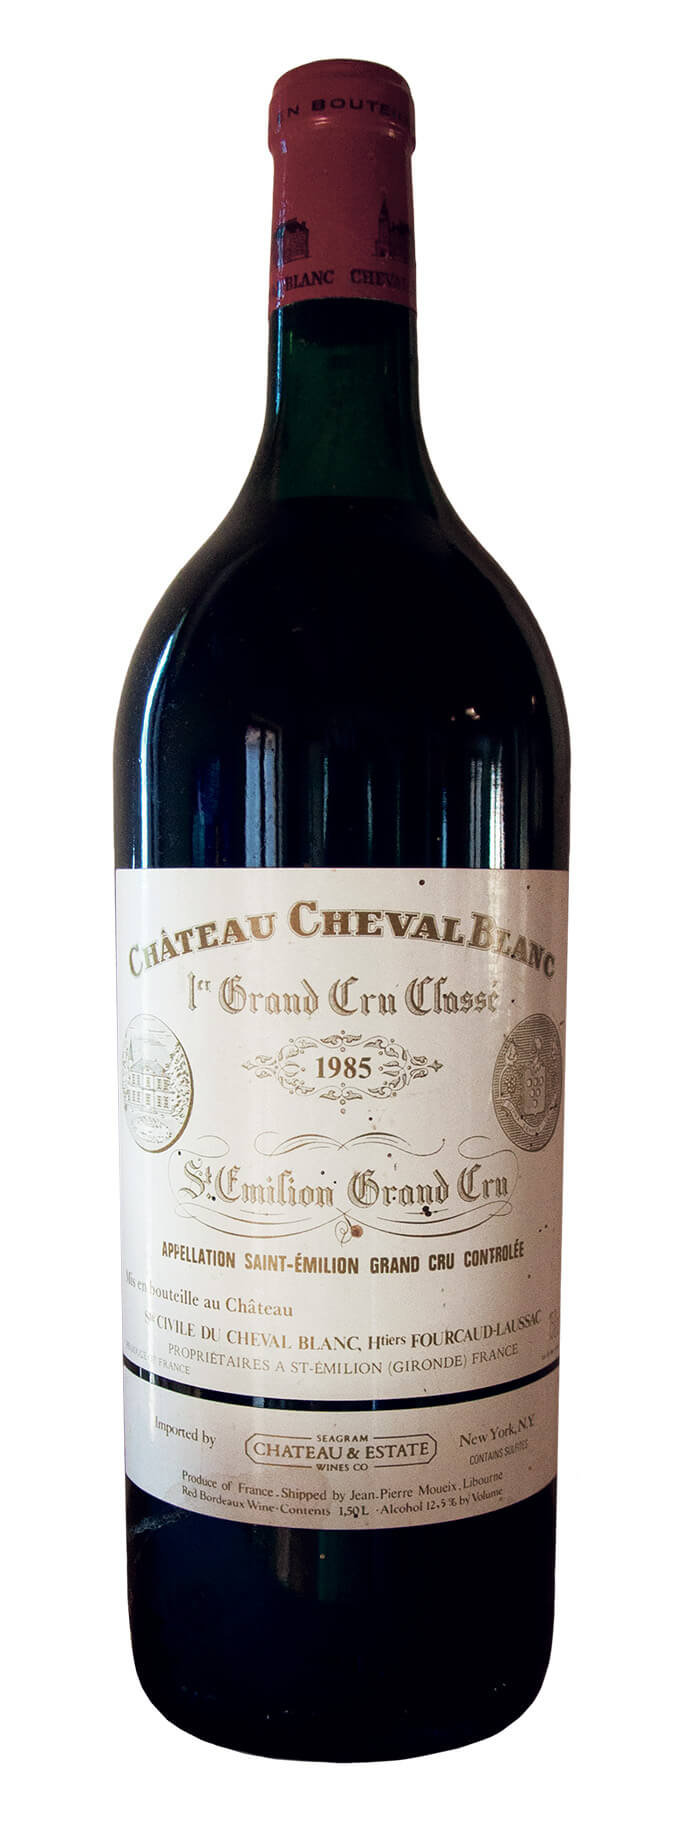 Chateau Cheval Blanc 2006 Grand Cru St. Emilion